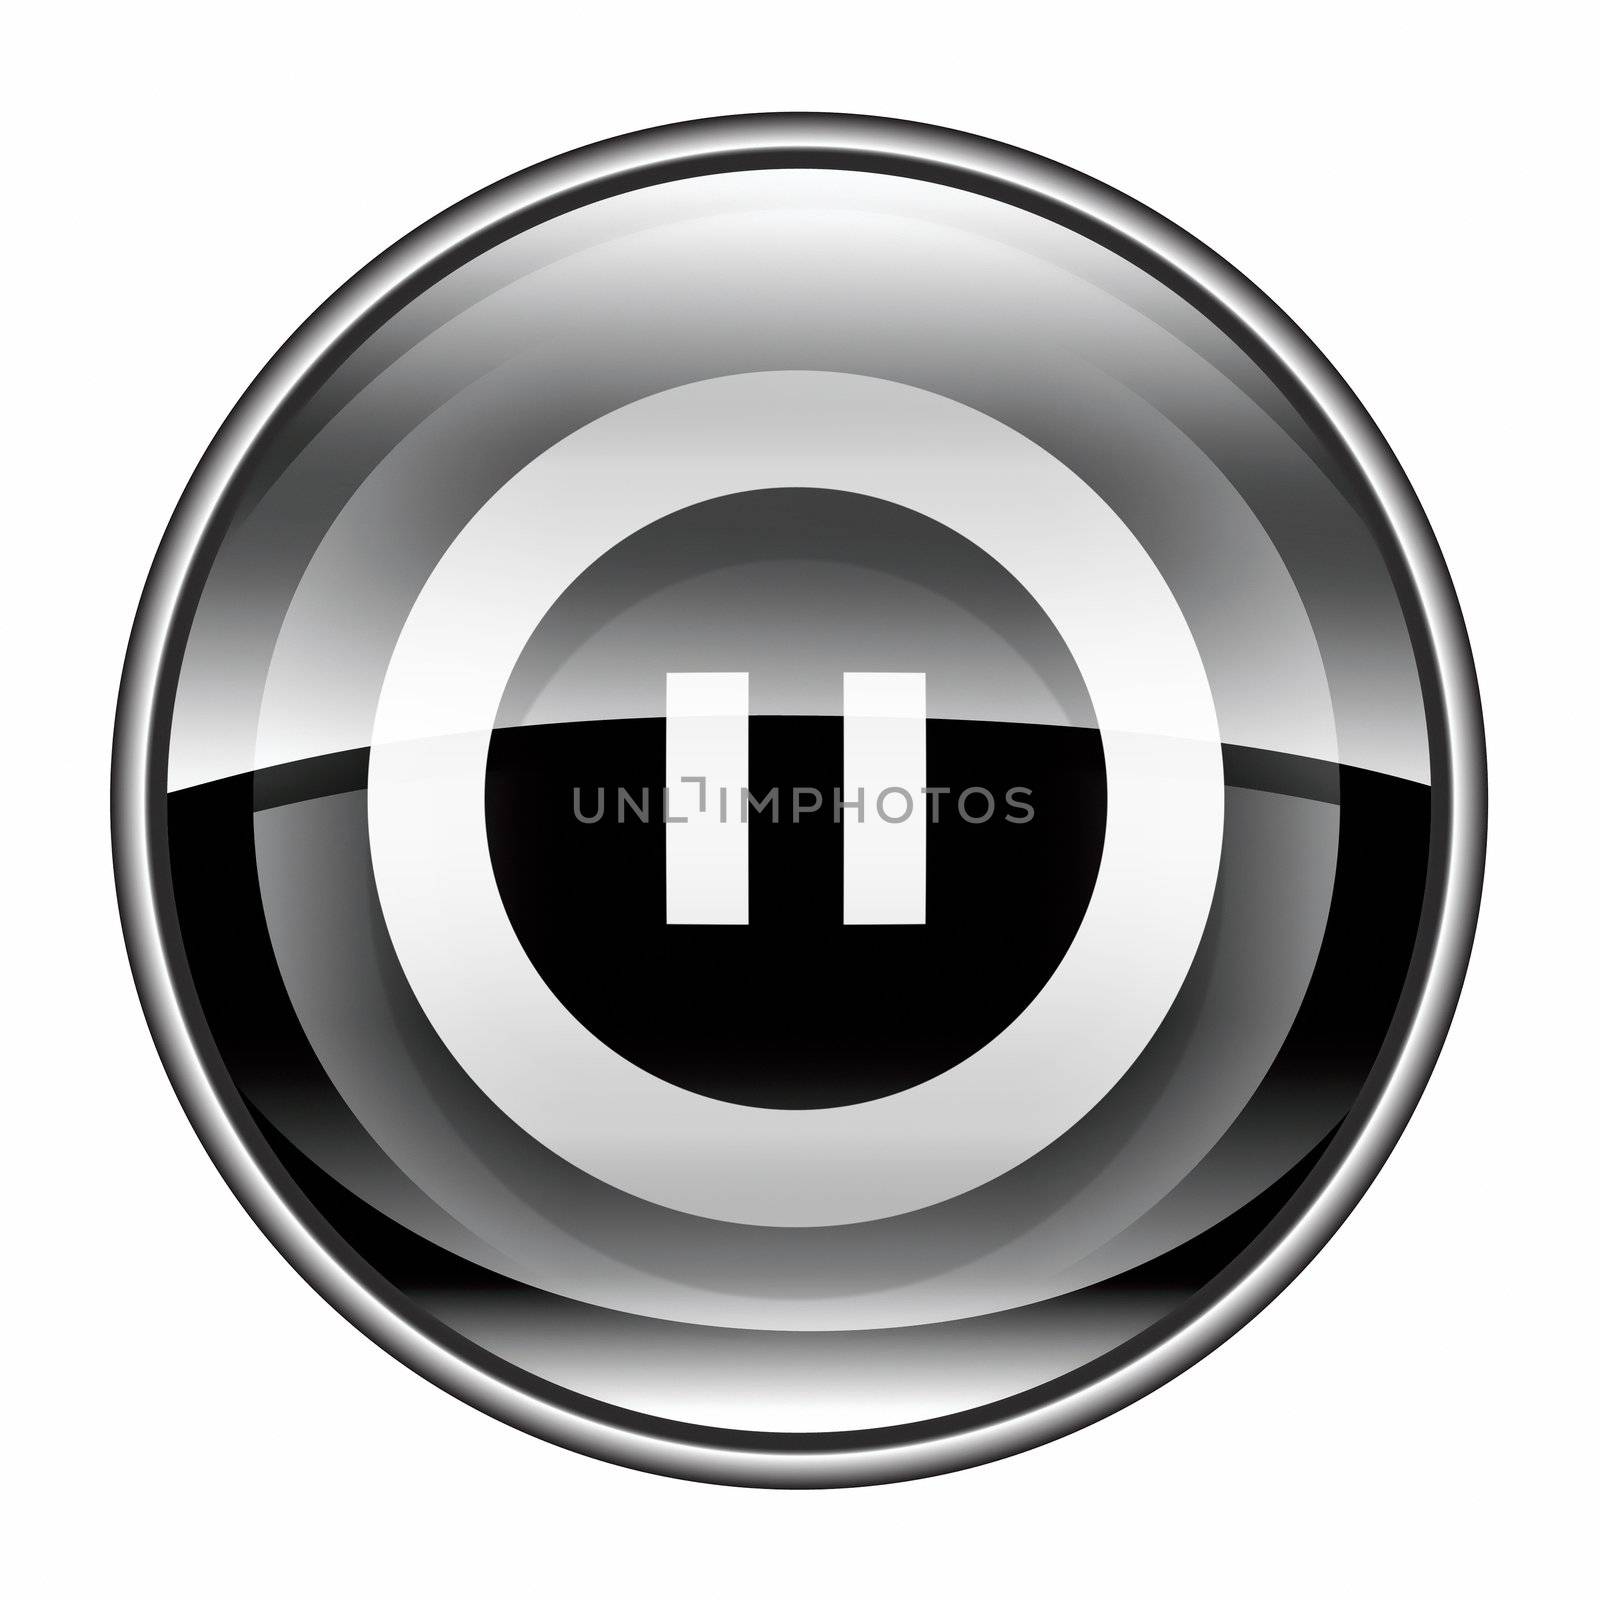 Pause icon black, isolated on white background.